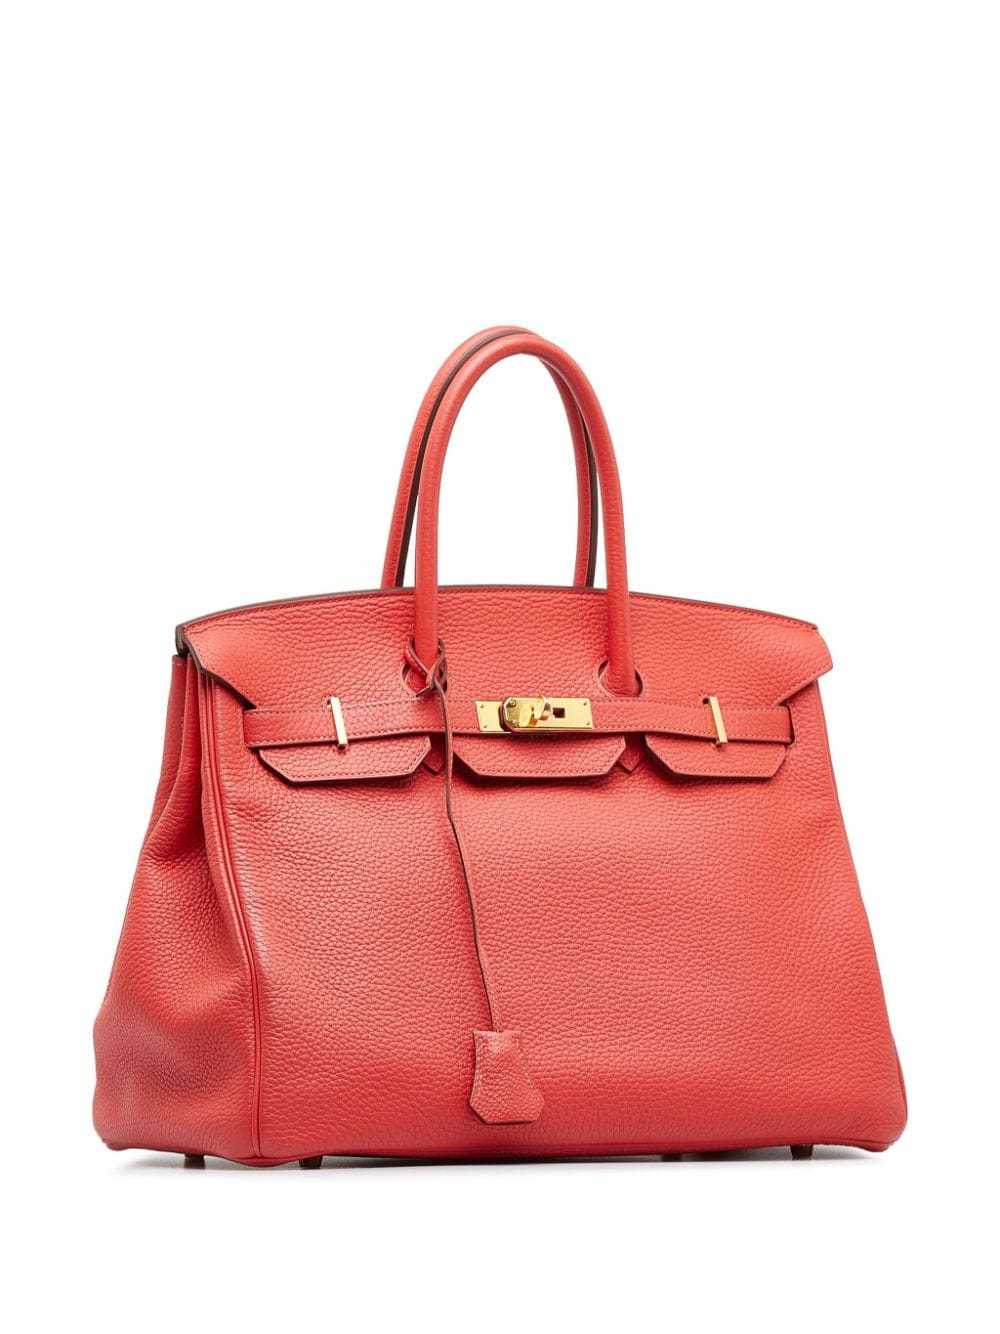 Hermès Pre-Owned 2014 Togo Birkin 35 handbag - Red - image 3